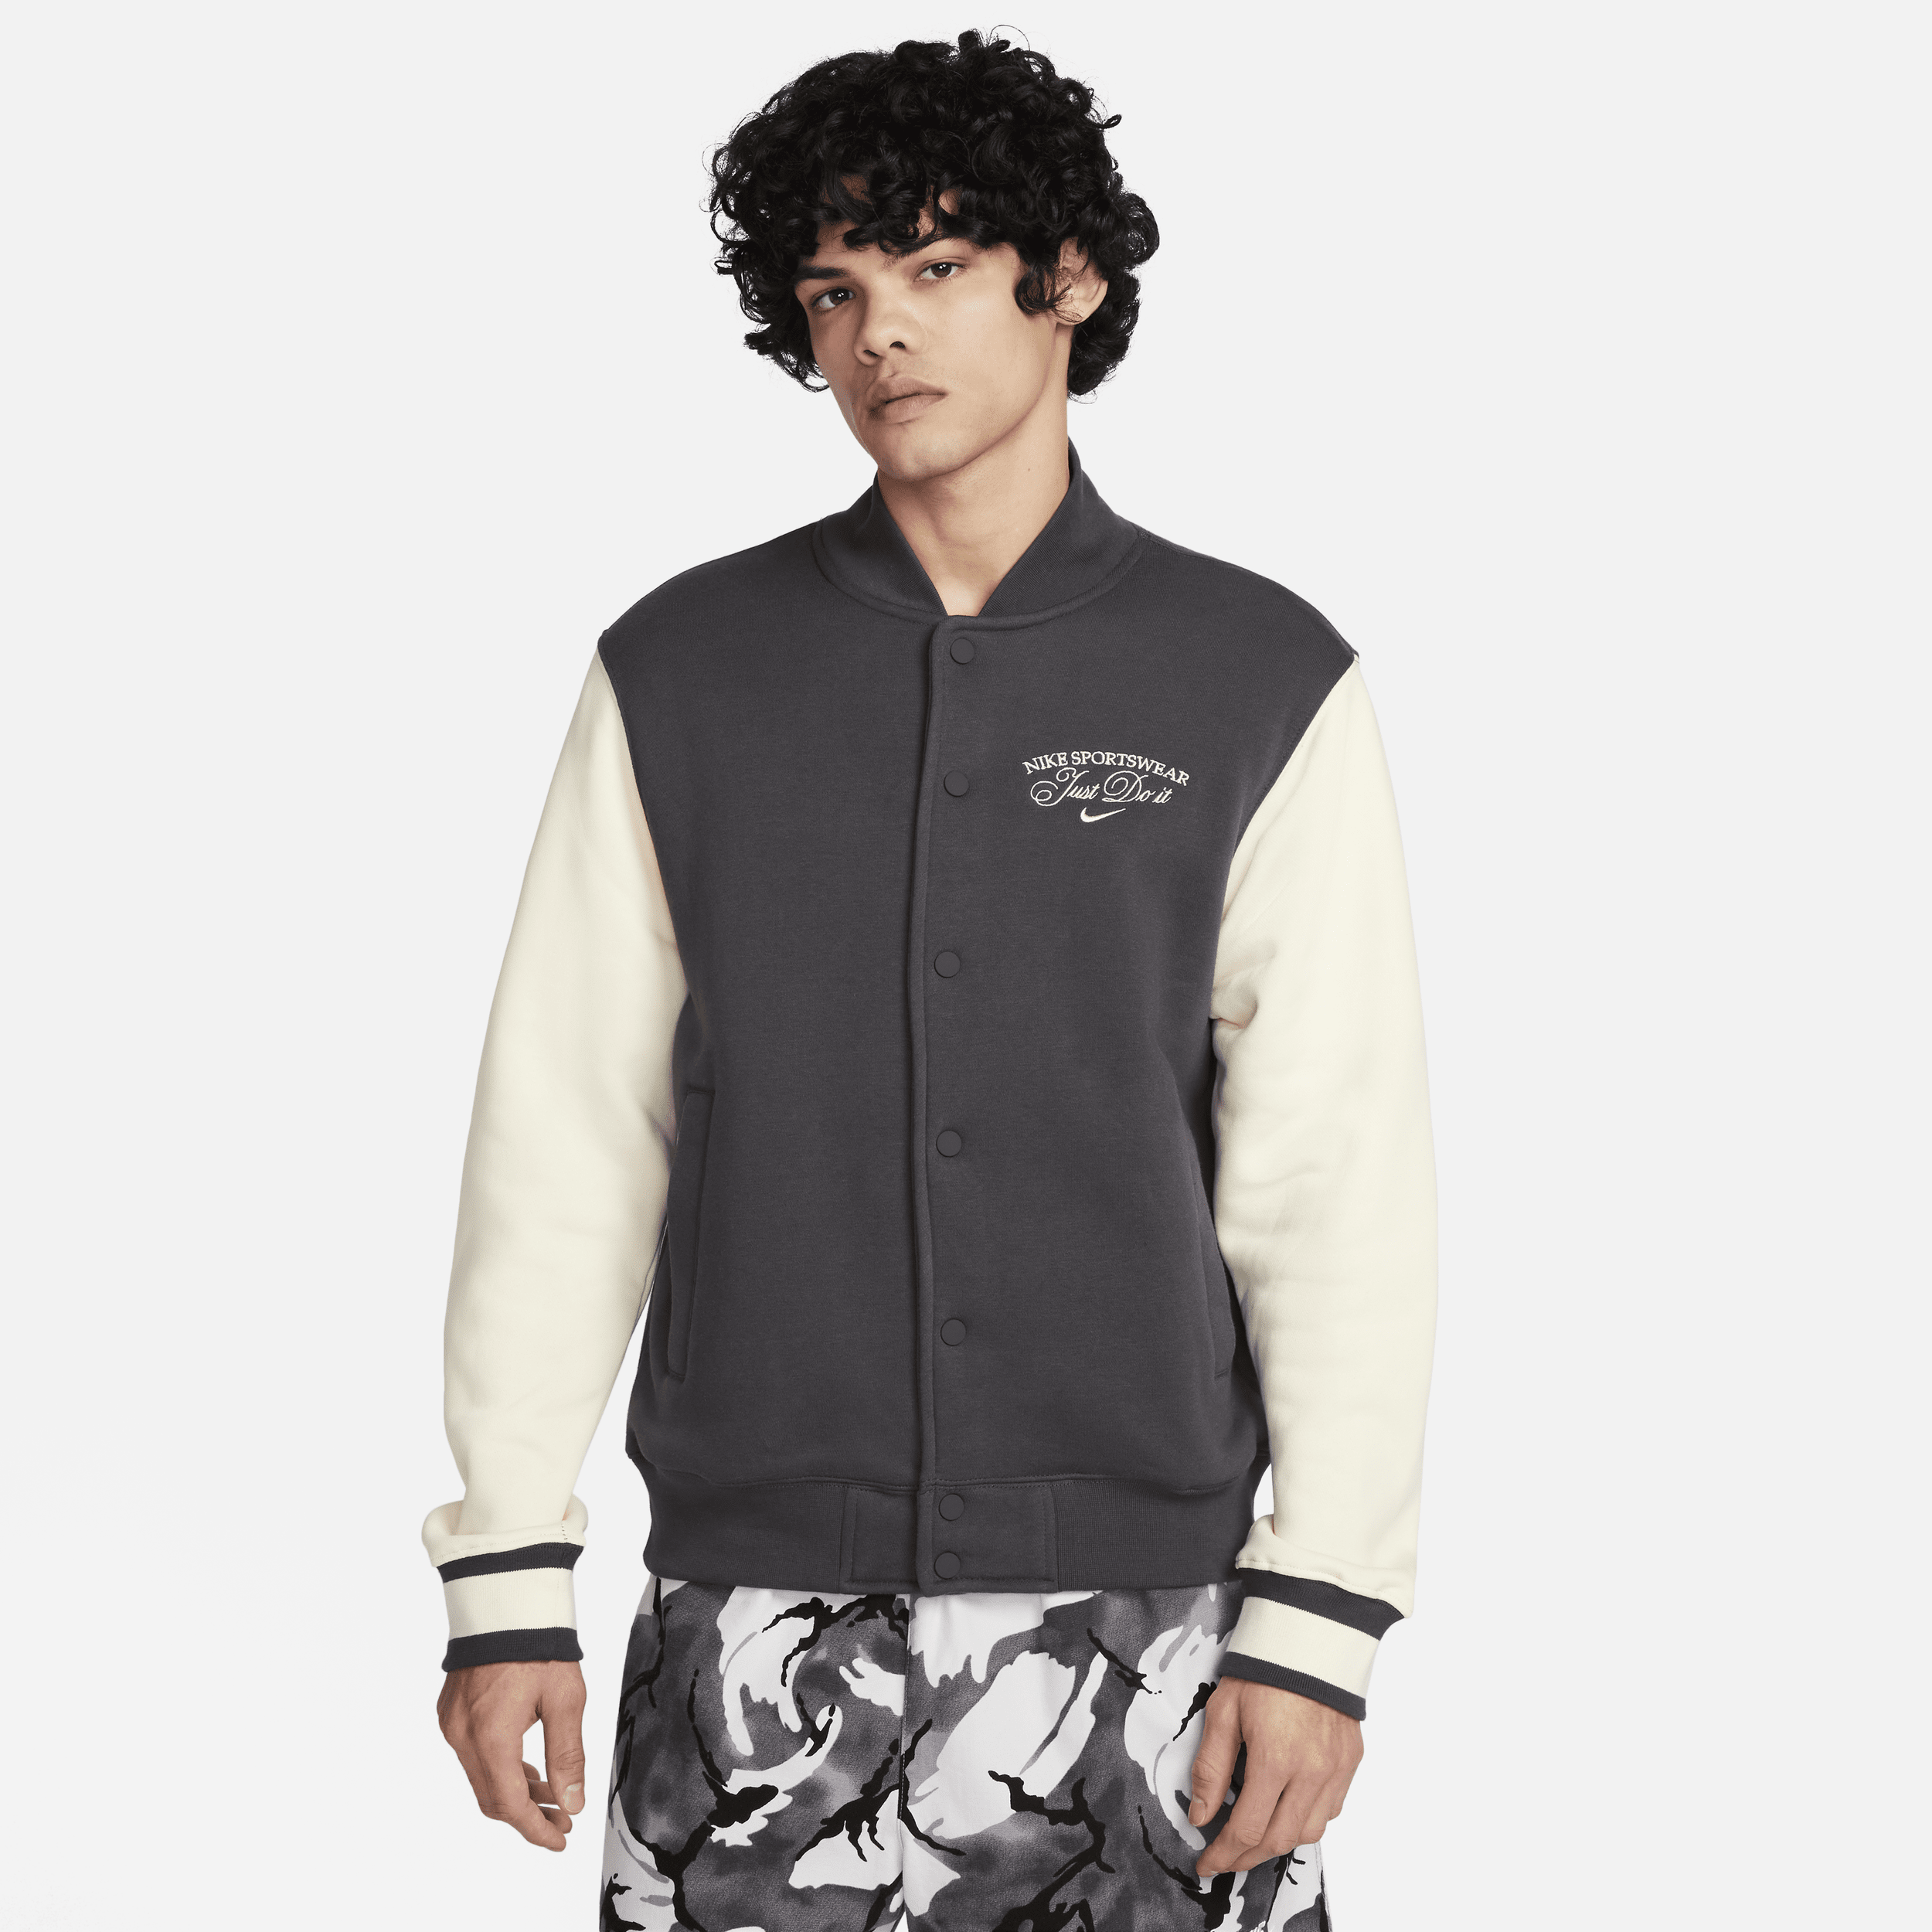 Giacca in fleece stile college Nike Sportswear – Uomo - Grigio